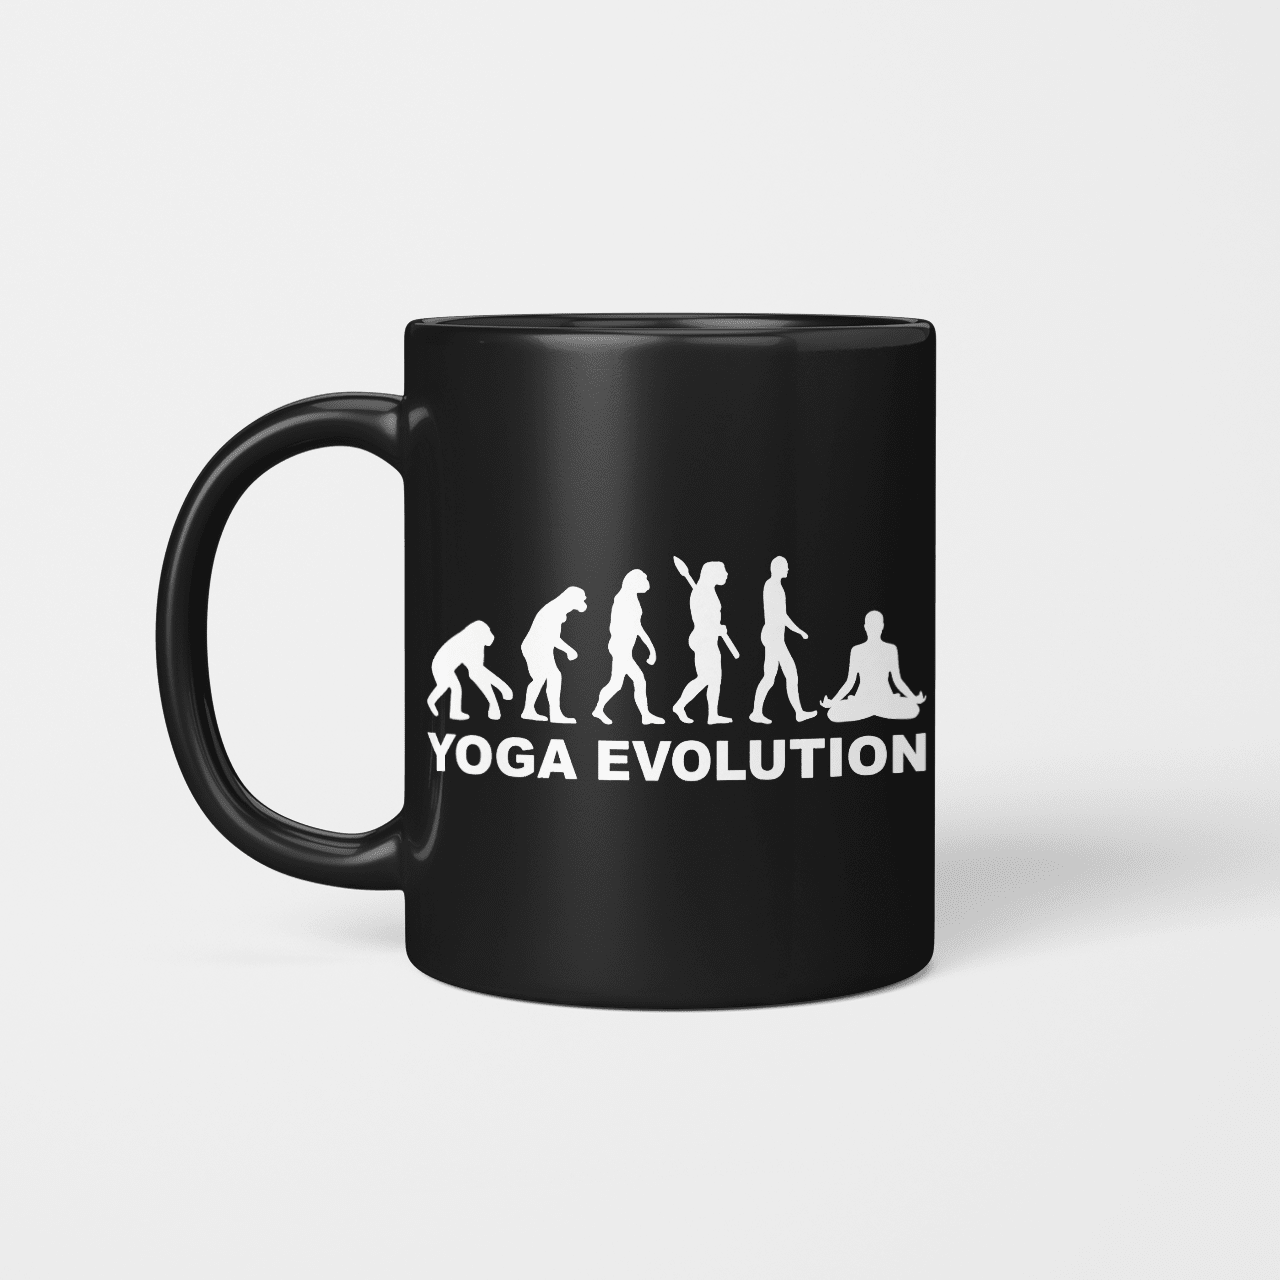 Yoga Evolution Yog2321